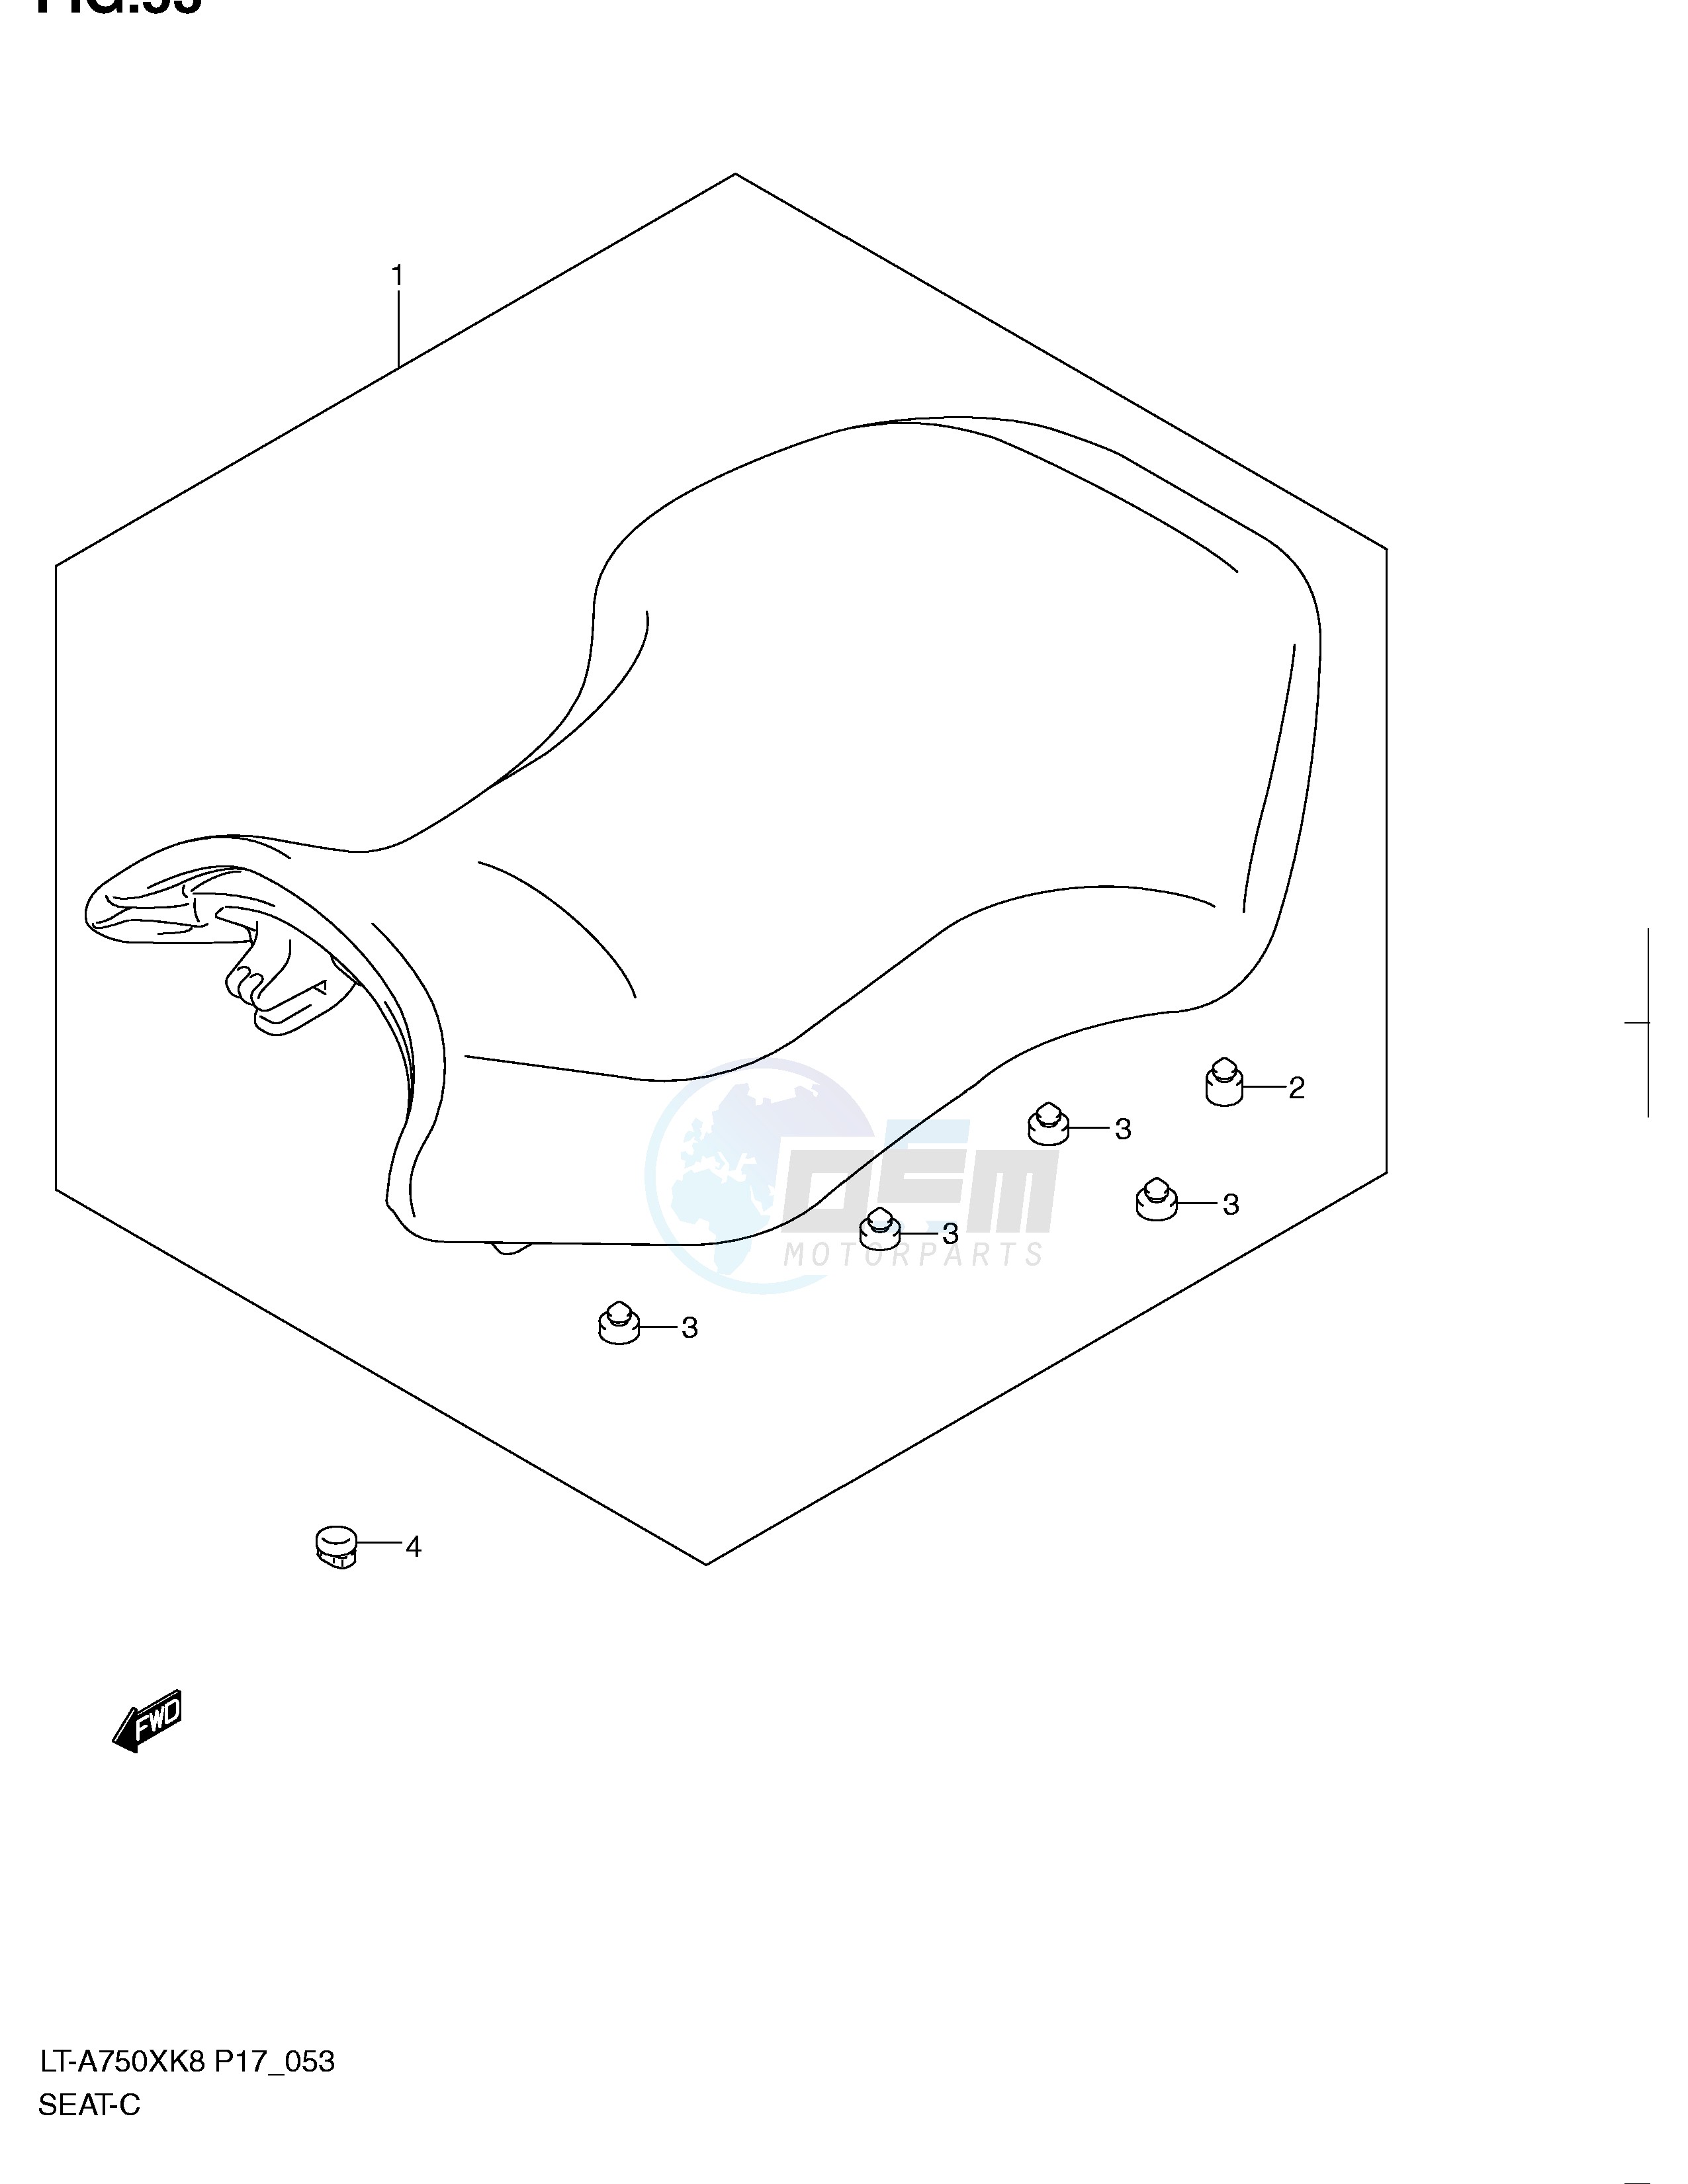 SEAT (P17) blueprint